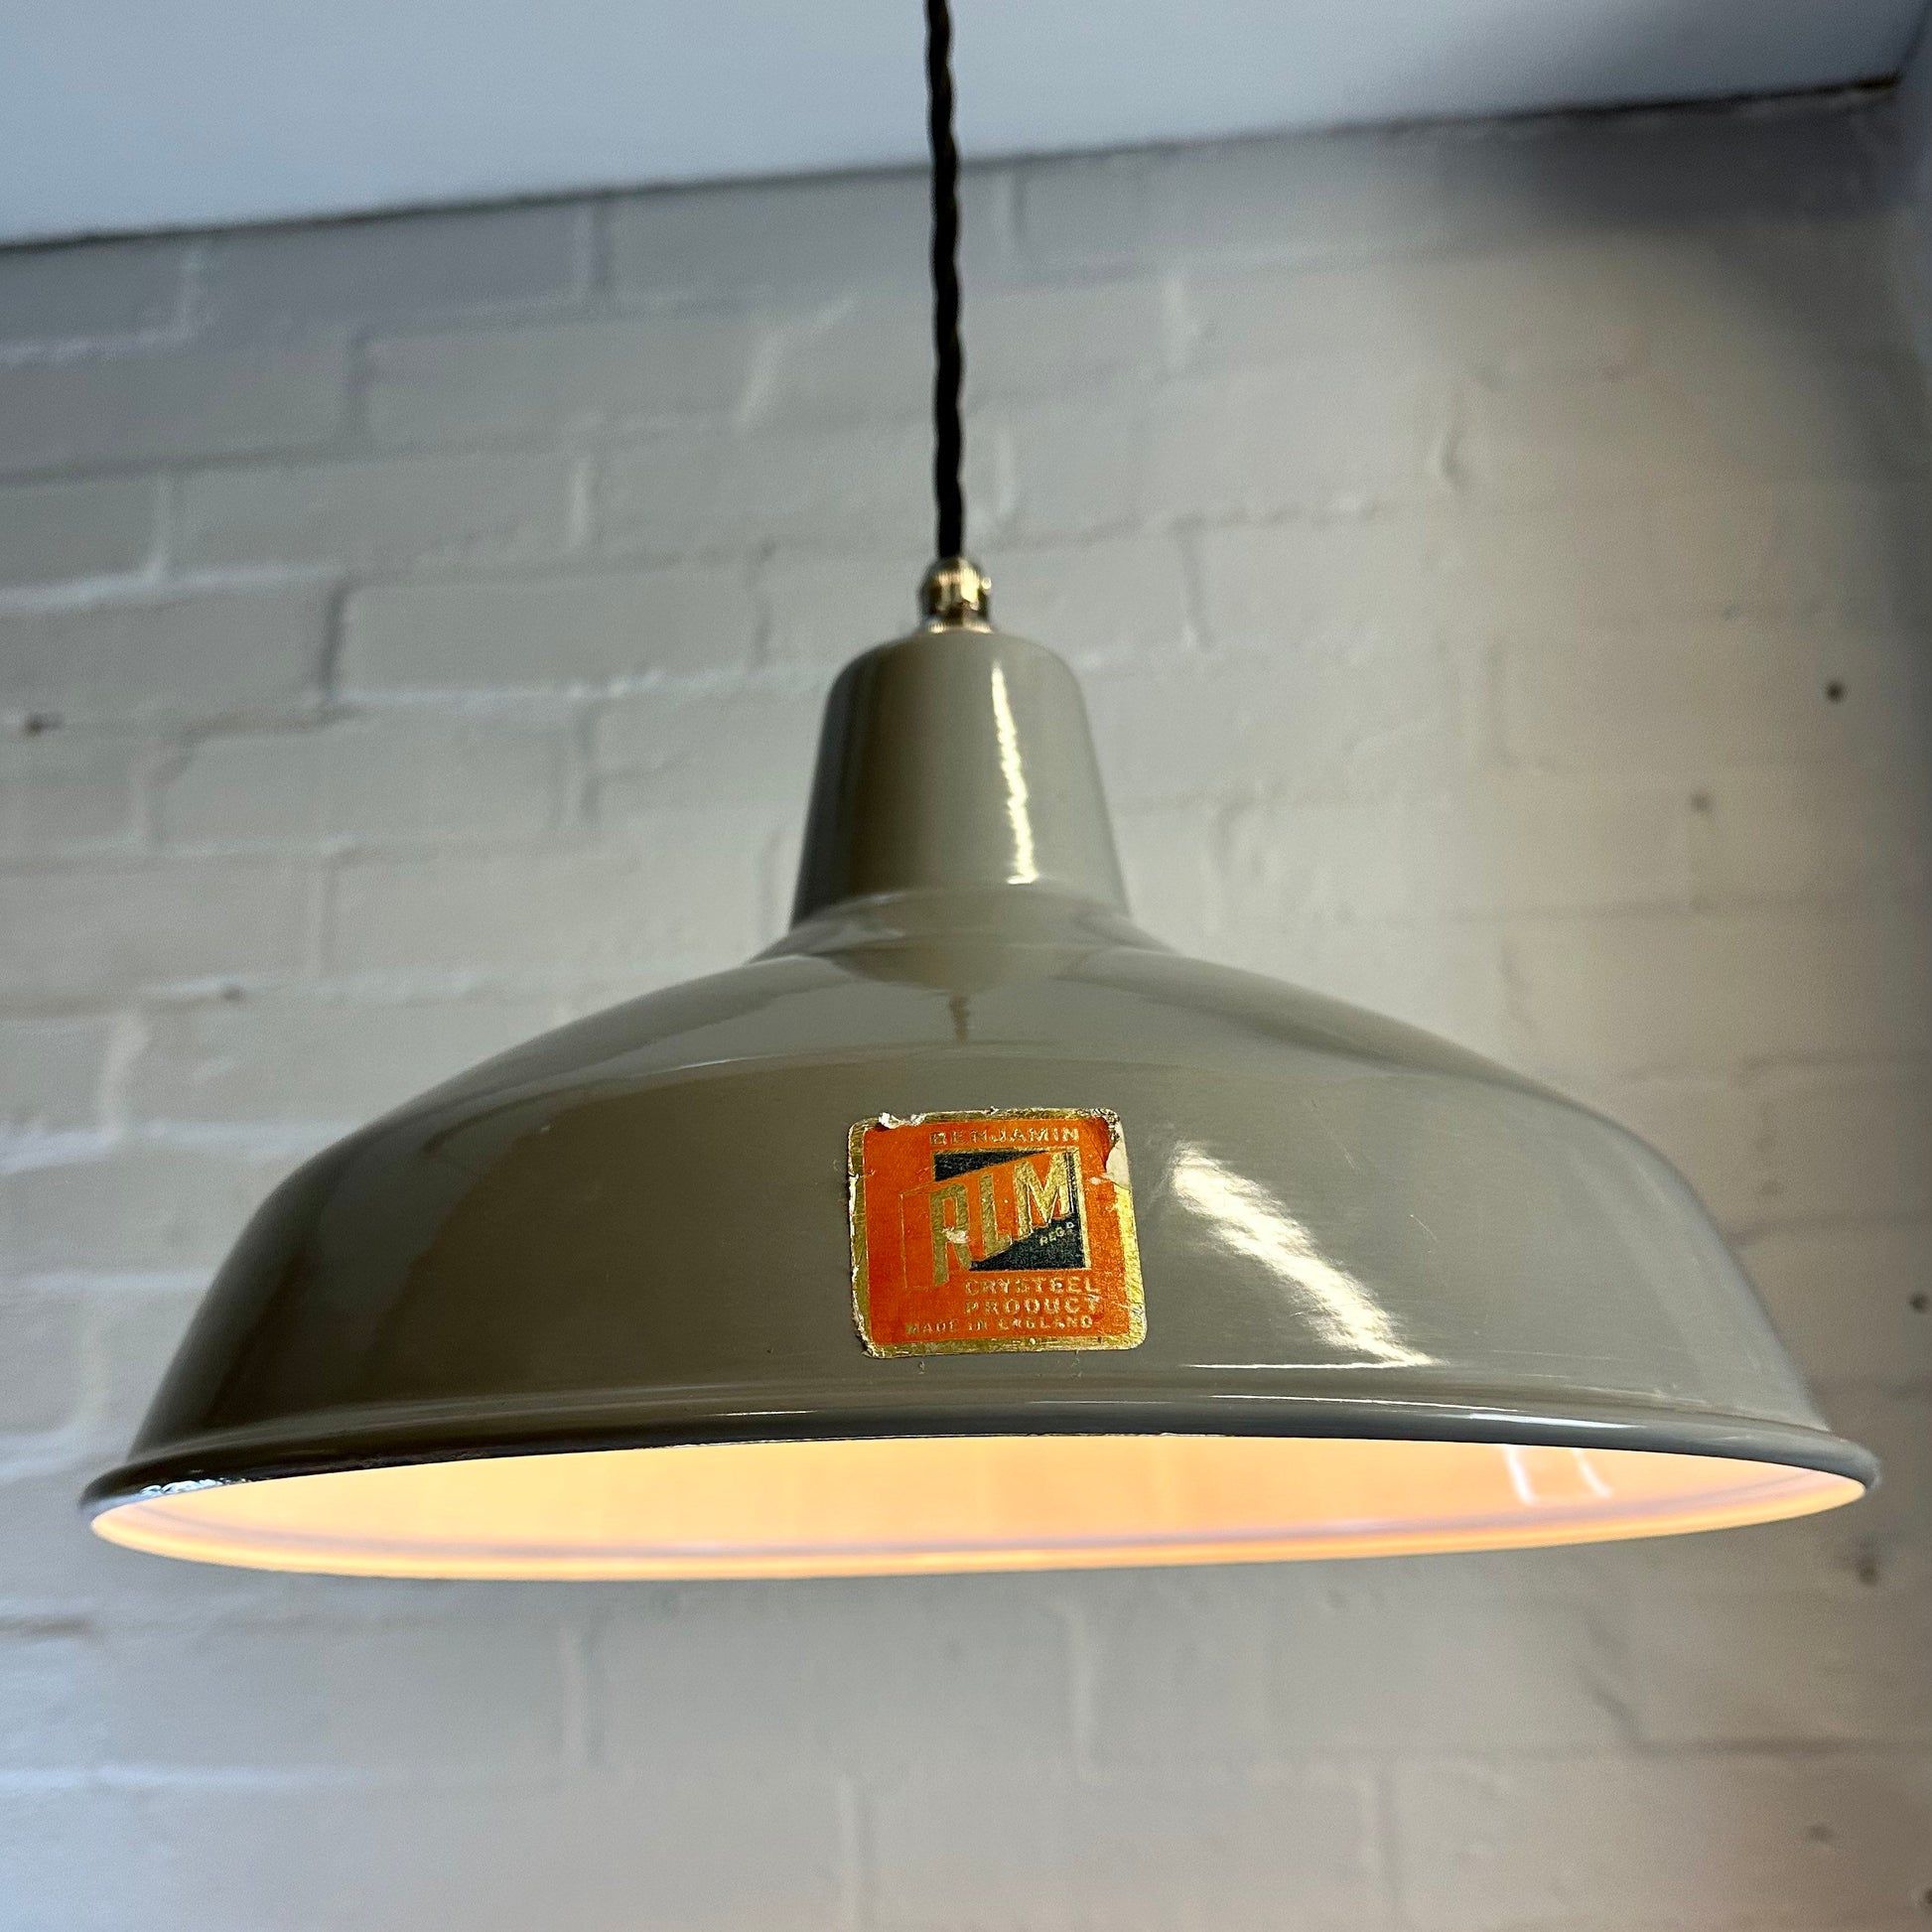 Geniune Grey Solid RLM Crysteel 19 Shade Pendant Set Light | Ceiling Dining Room | Antique Restored | Kitchen Table | Vintage Filament Bulb